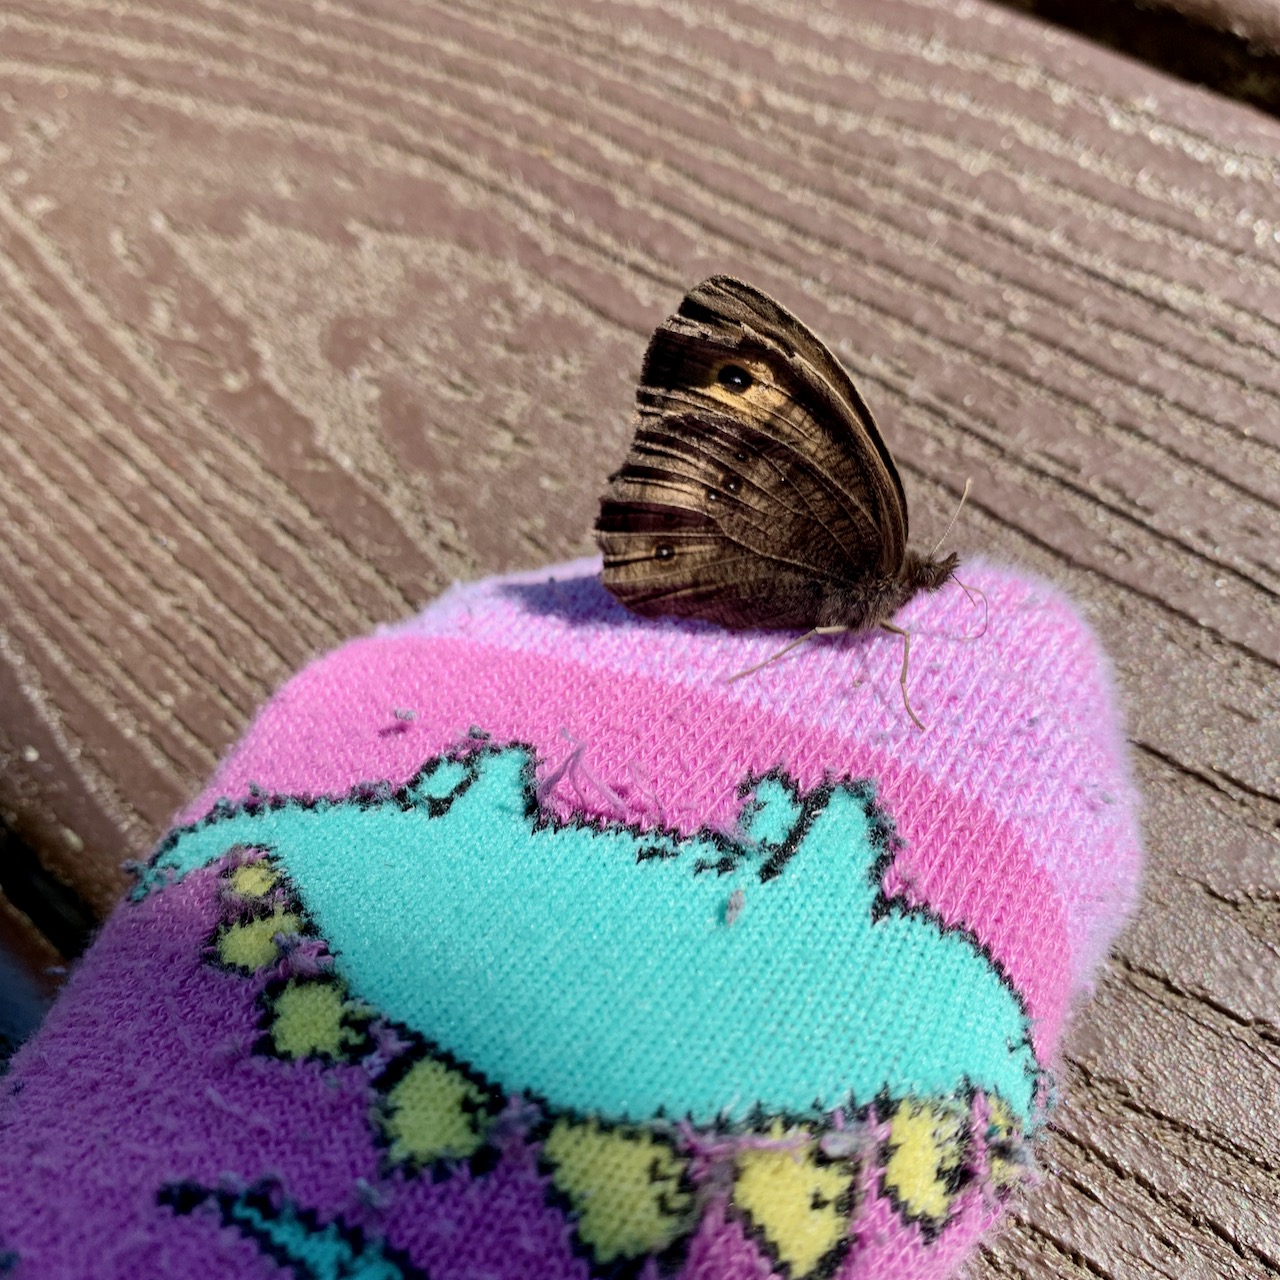 Moth on a sock